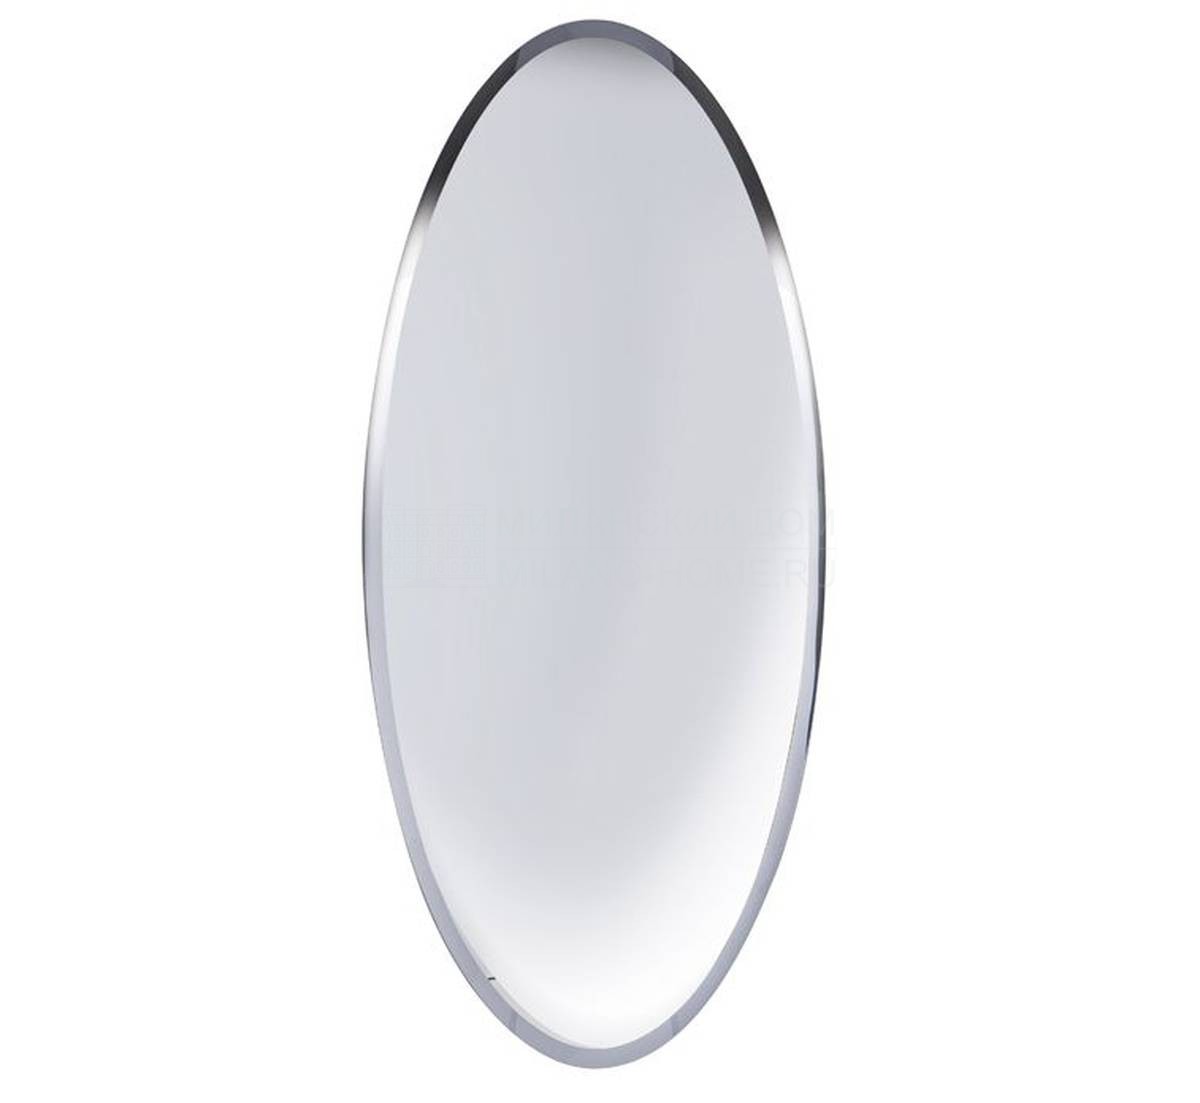 Зеркало настенное Murray mirror из Италии фабрики MINOTTI